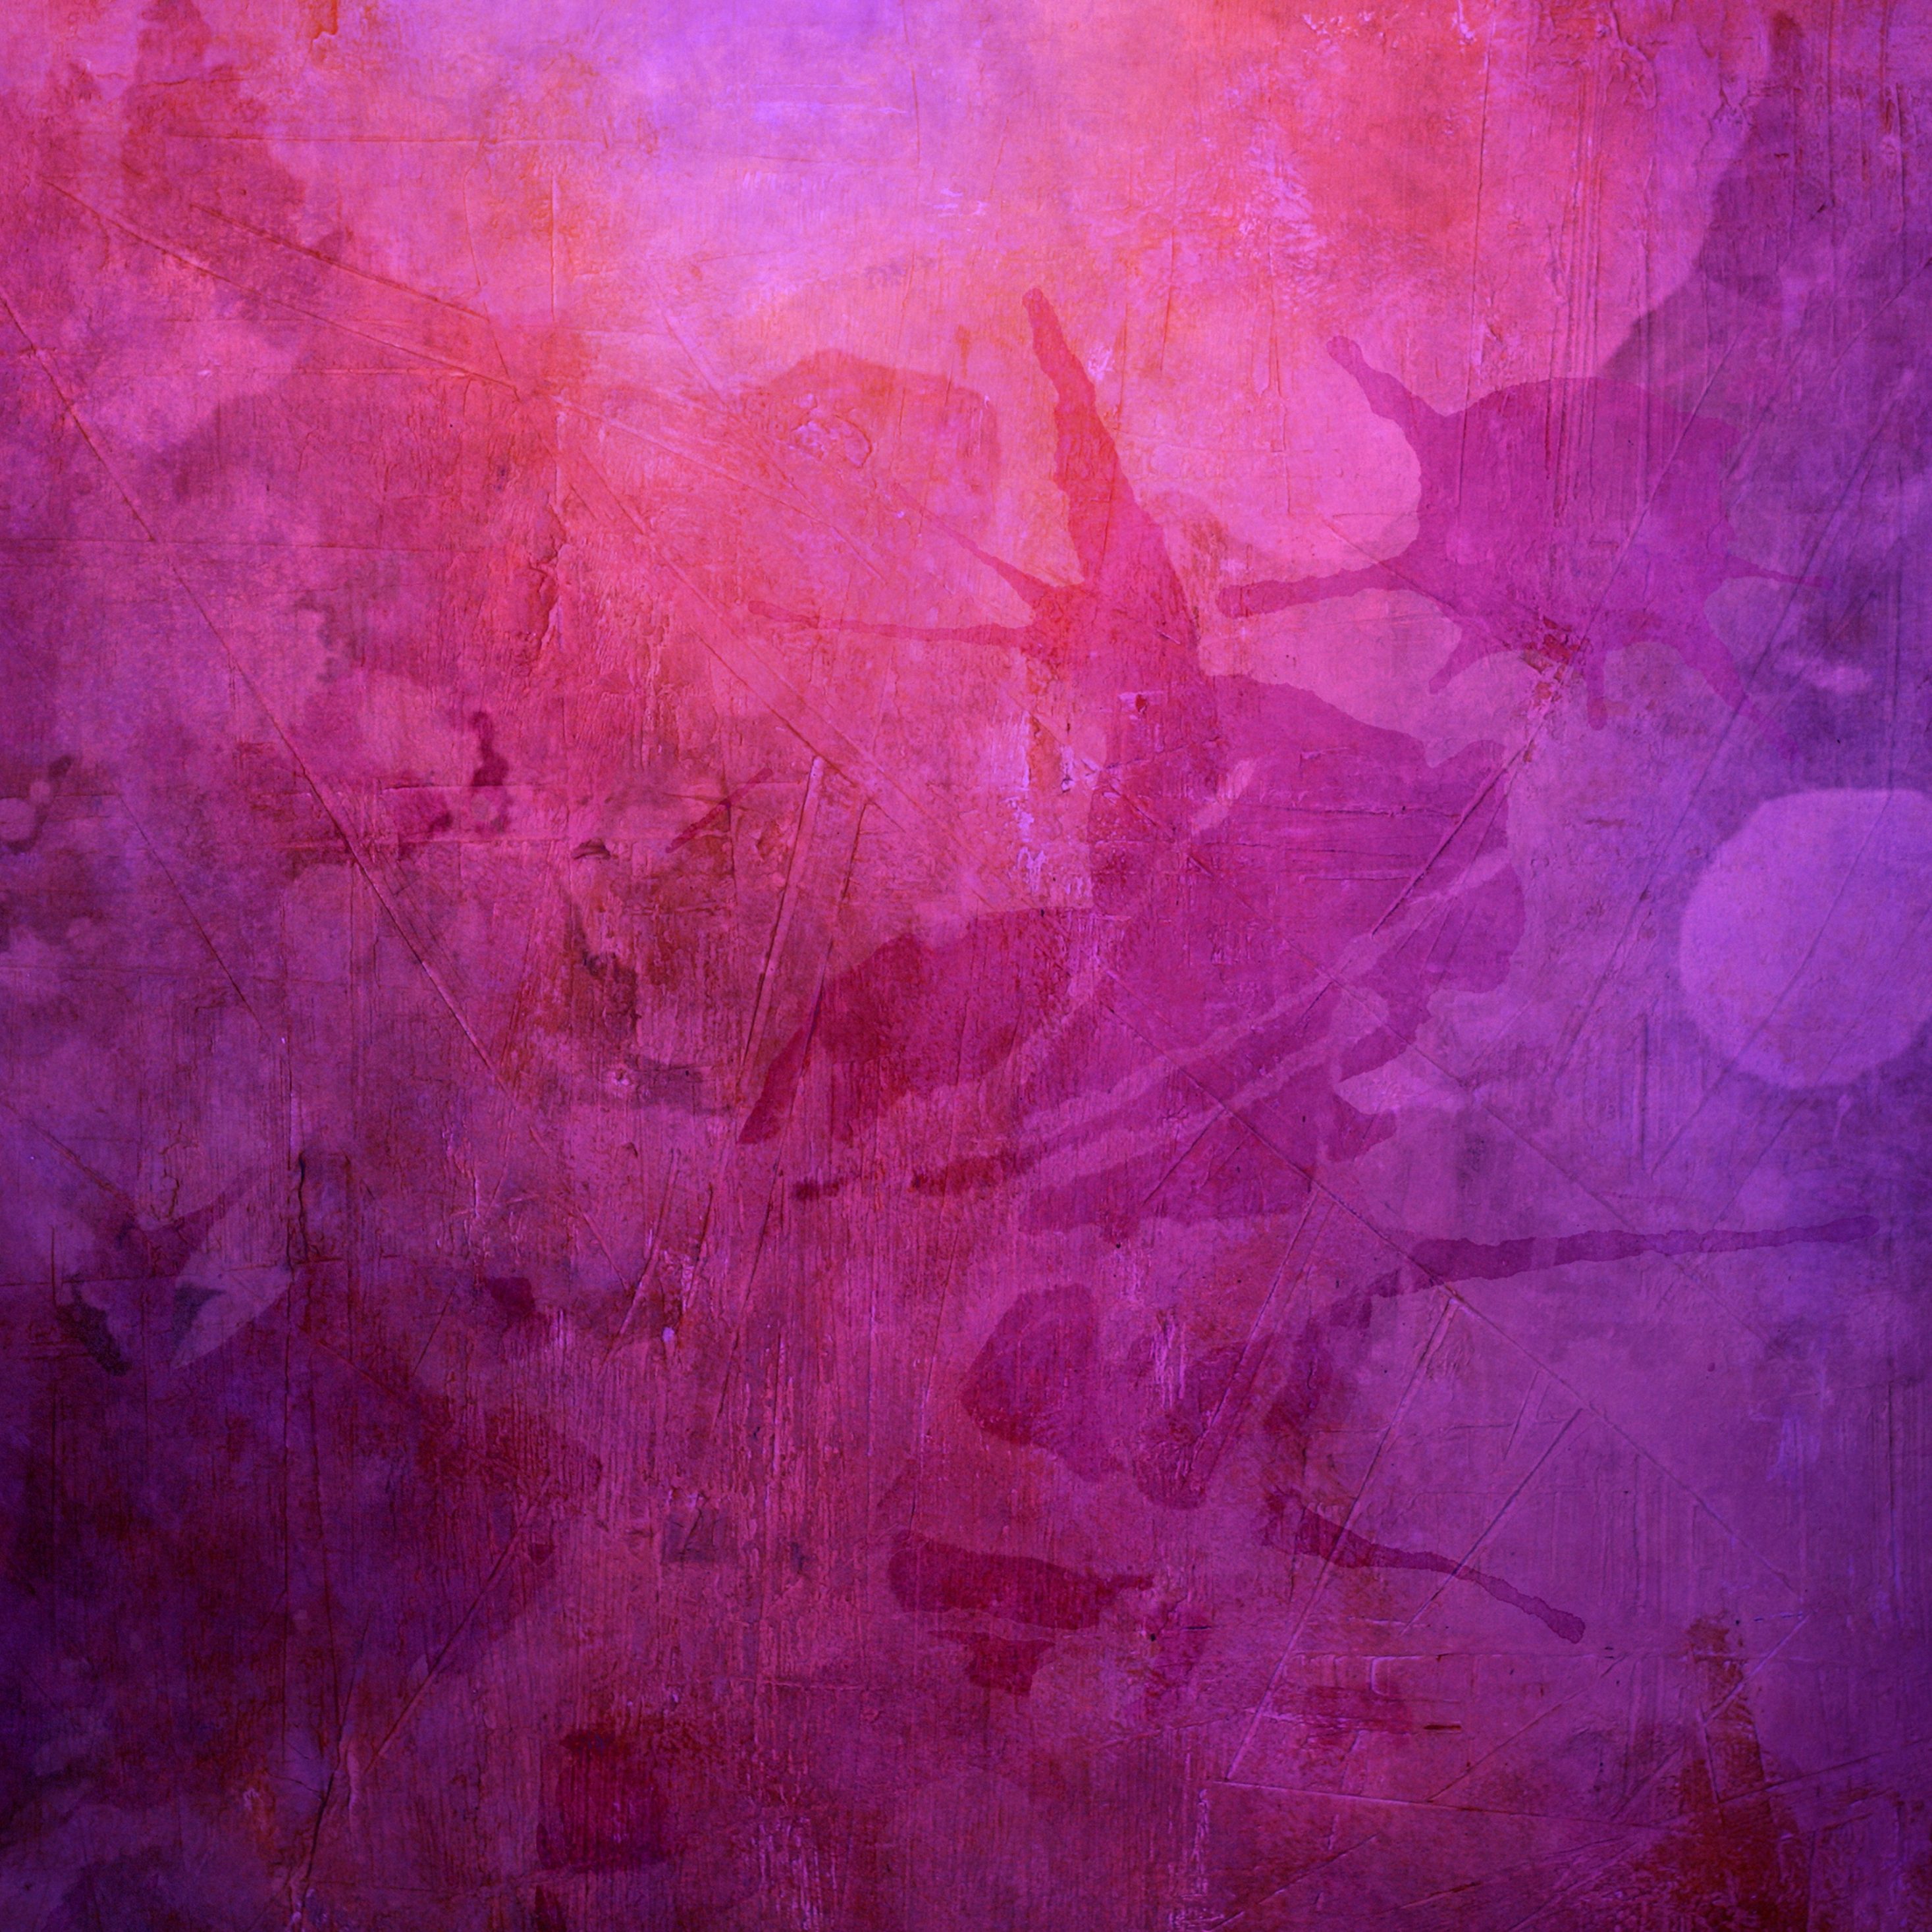 2934x2934 iOS iPad wallpaper 4k Purple Watercolor Painting iPad Wallpaper 2934x2934 pixels resolution